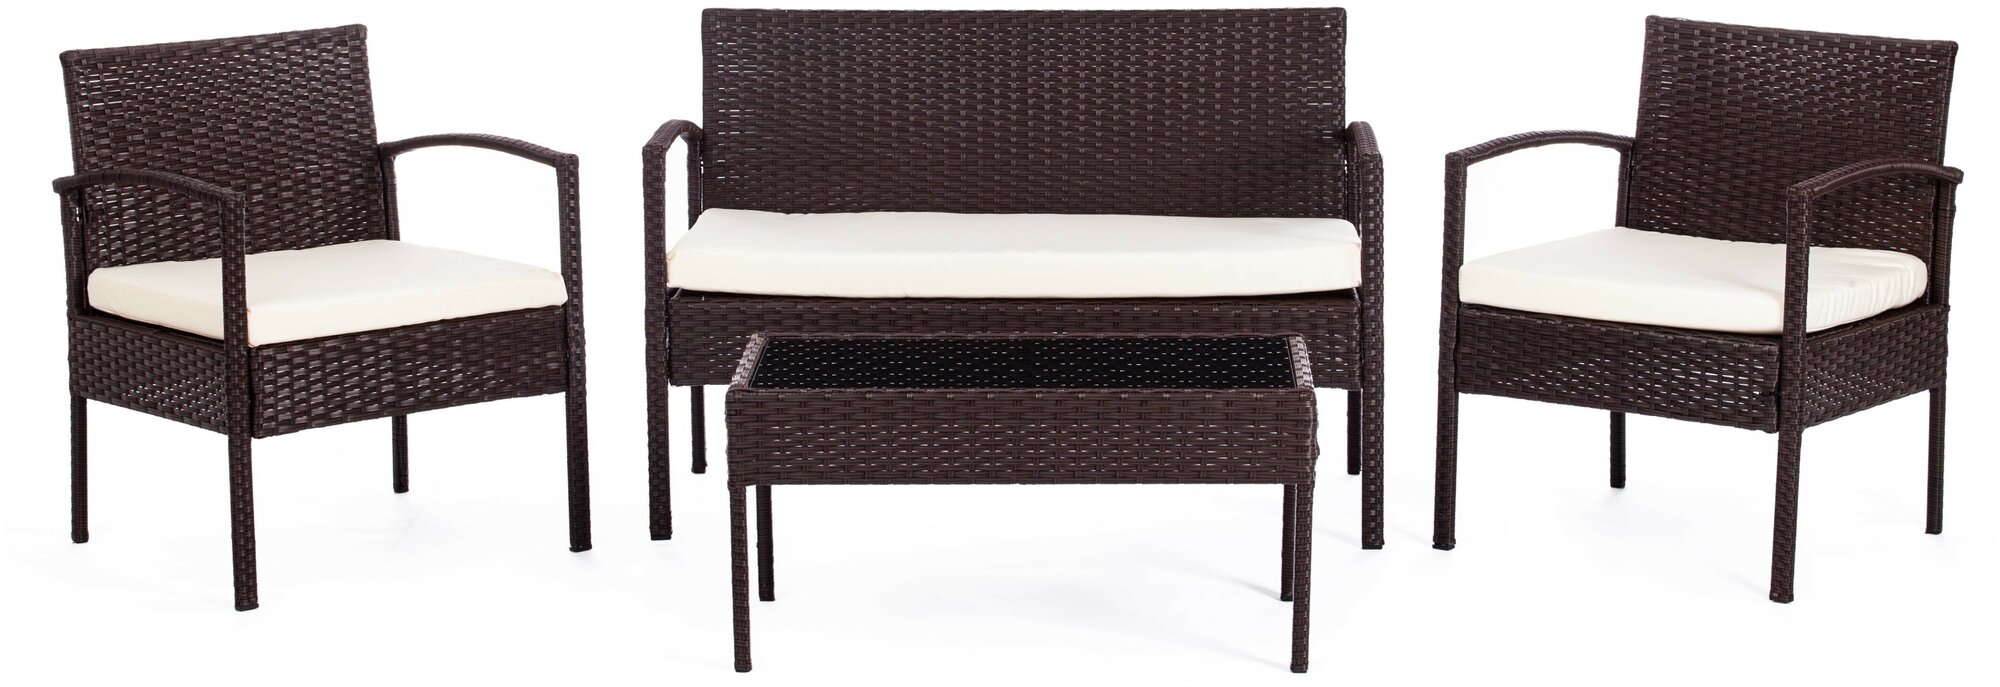 Лаундж сет TetChair (диван+2кресла+столик+подушки) (mod. 210000), коричневый, ткань: DB-02 бежевый